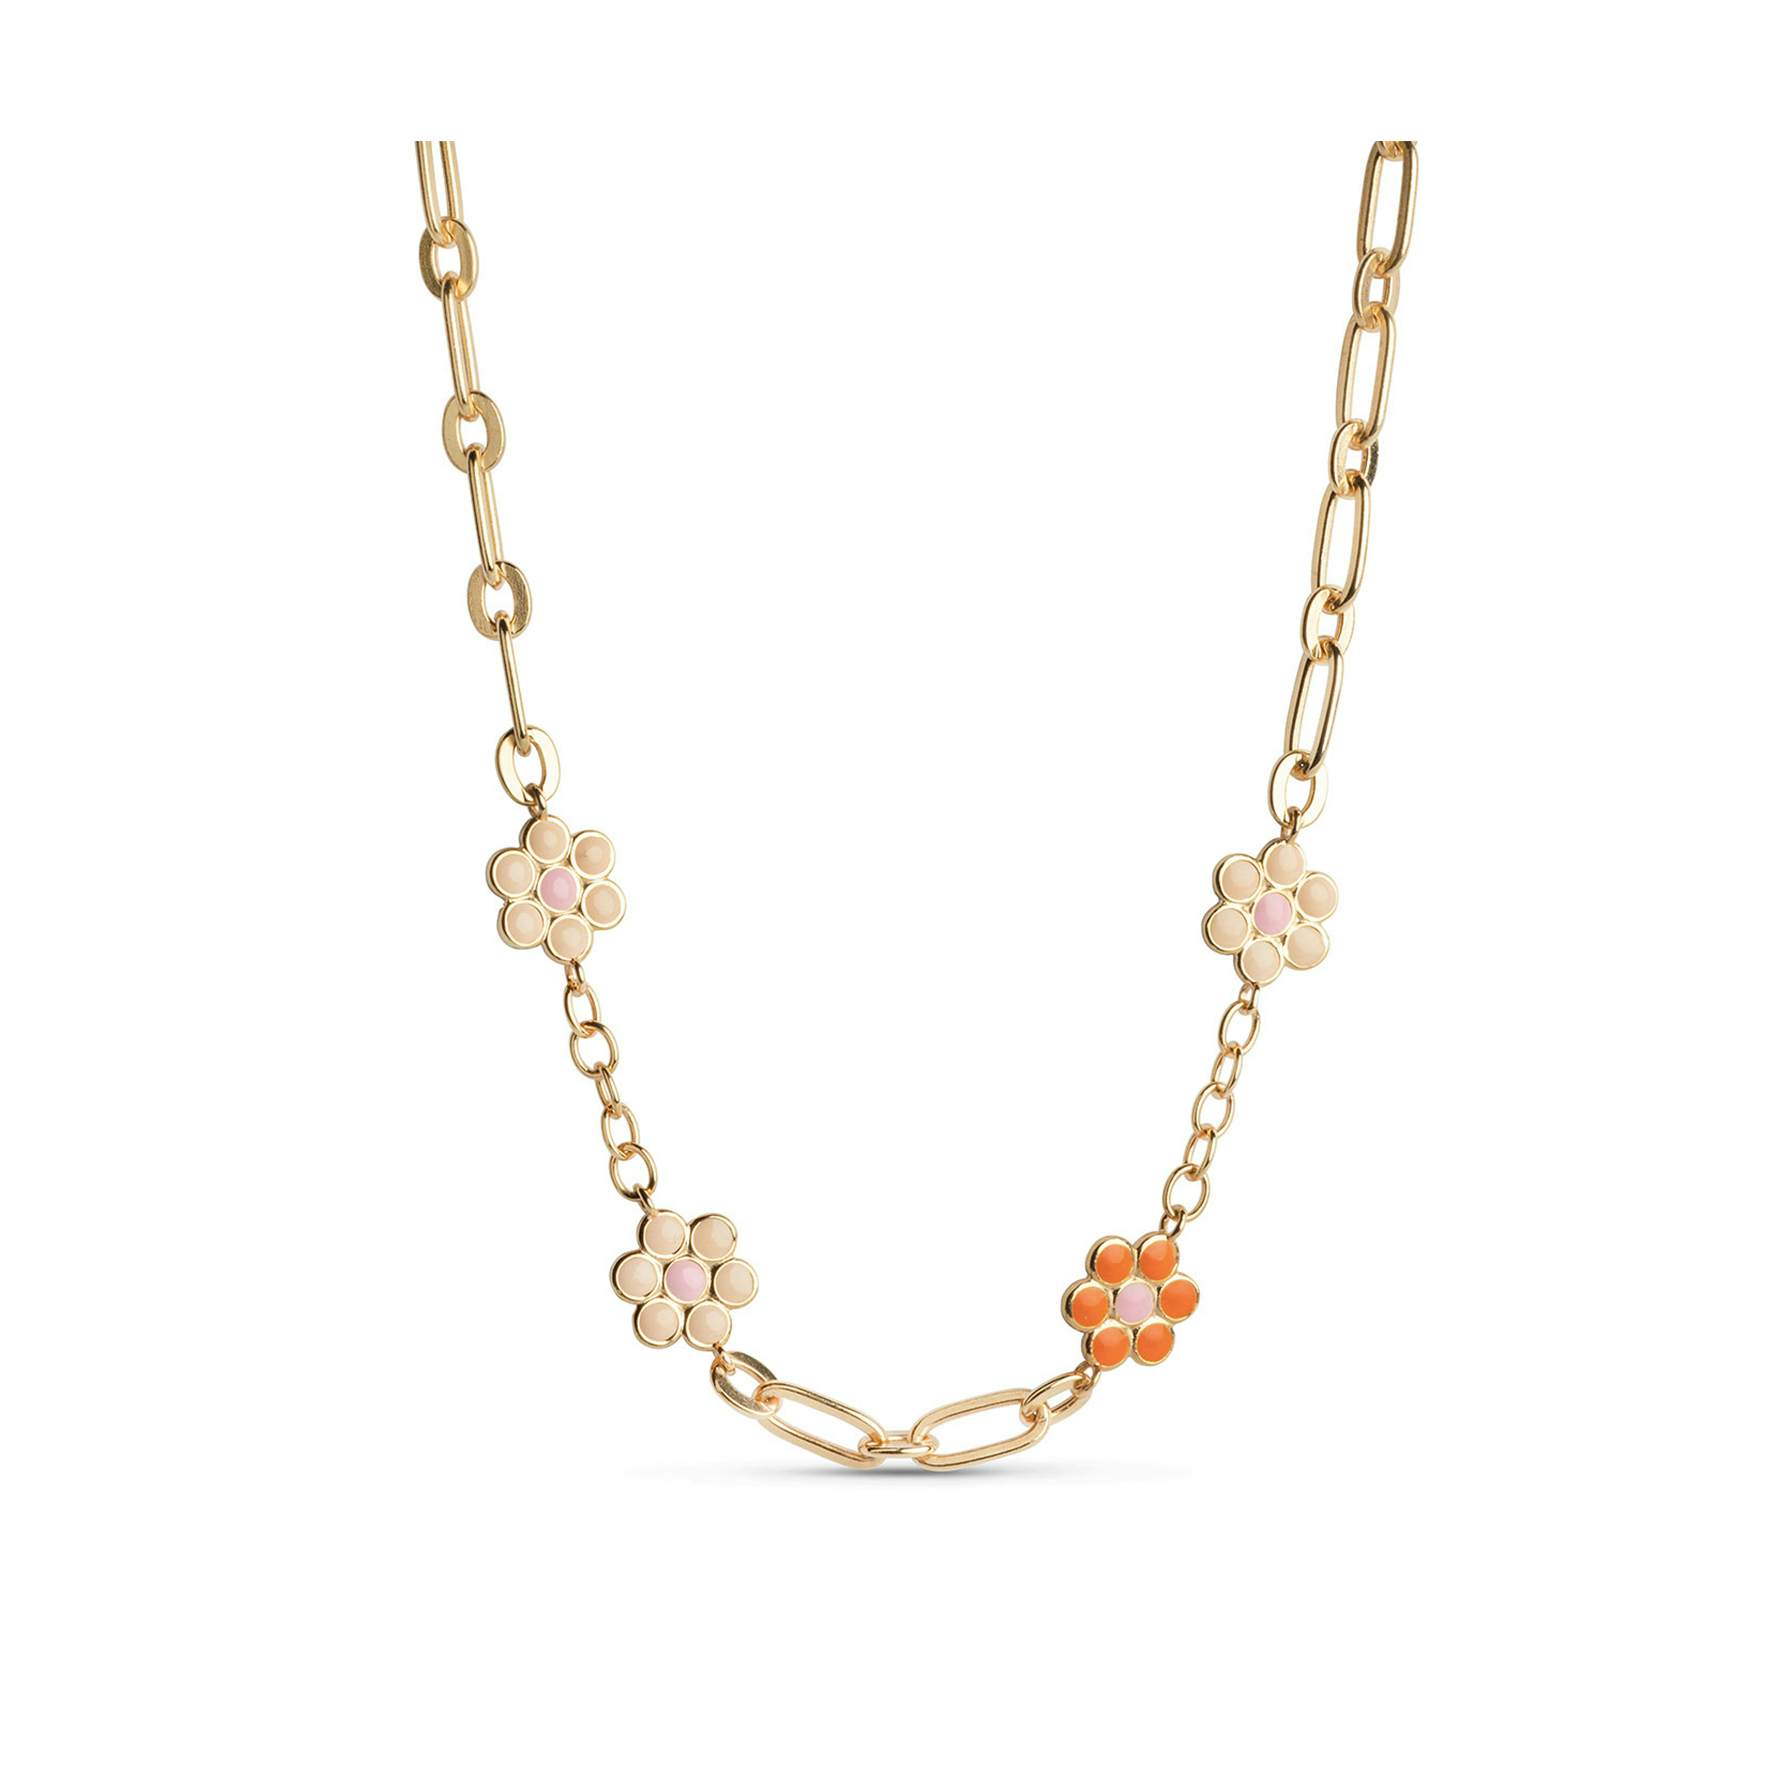 Blossom Necklace Orange/Beige/Light Blue/Light Pink from Enamel Copenhagen in Goldplated-Silver Sterling 925||Blank